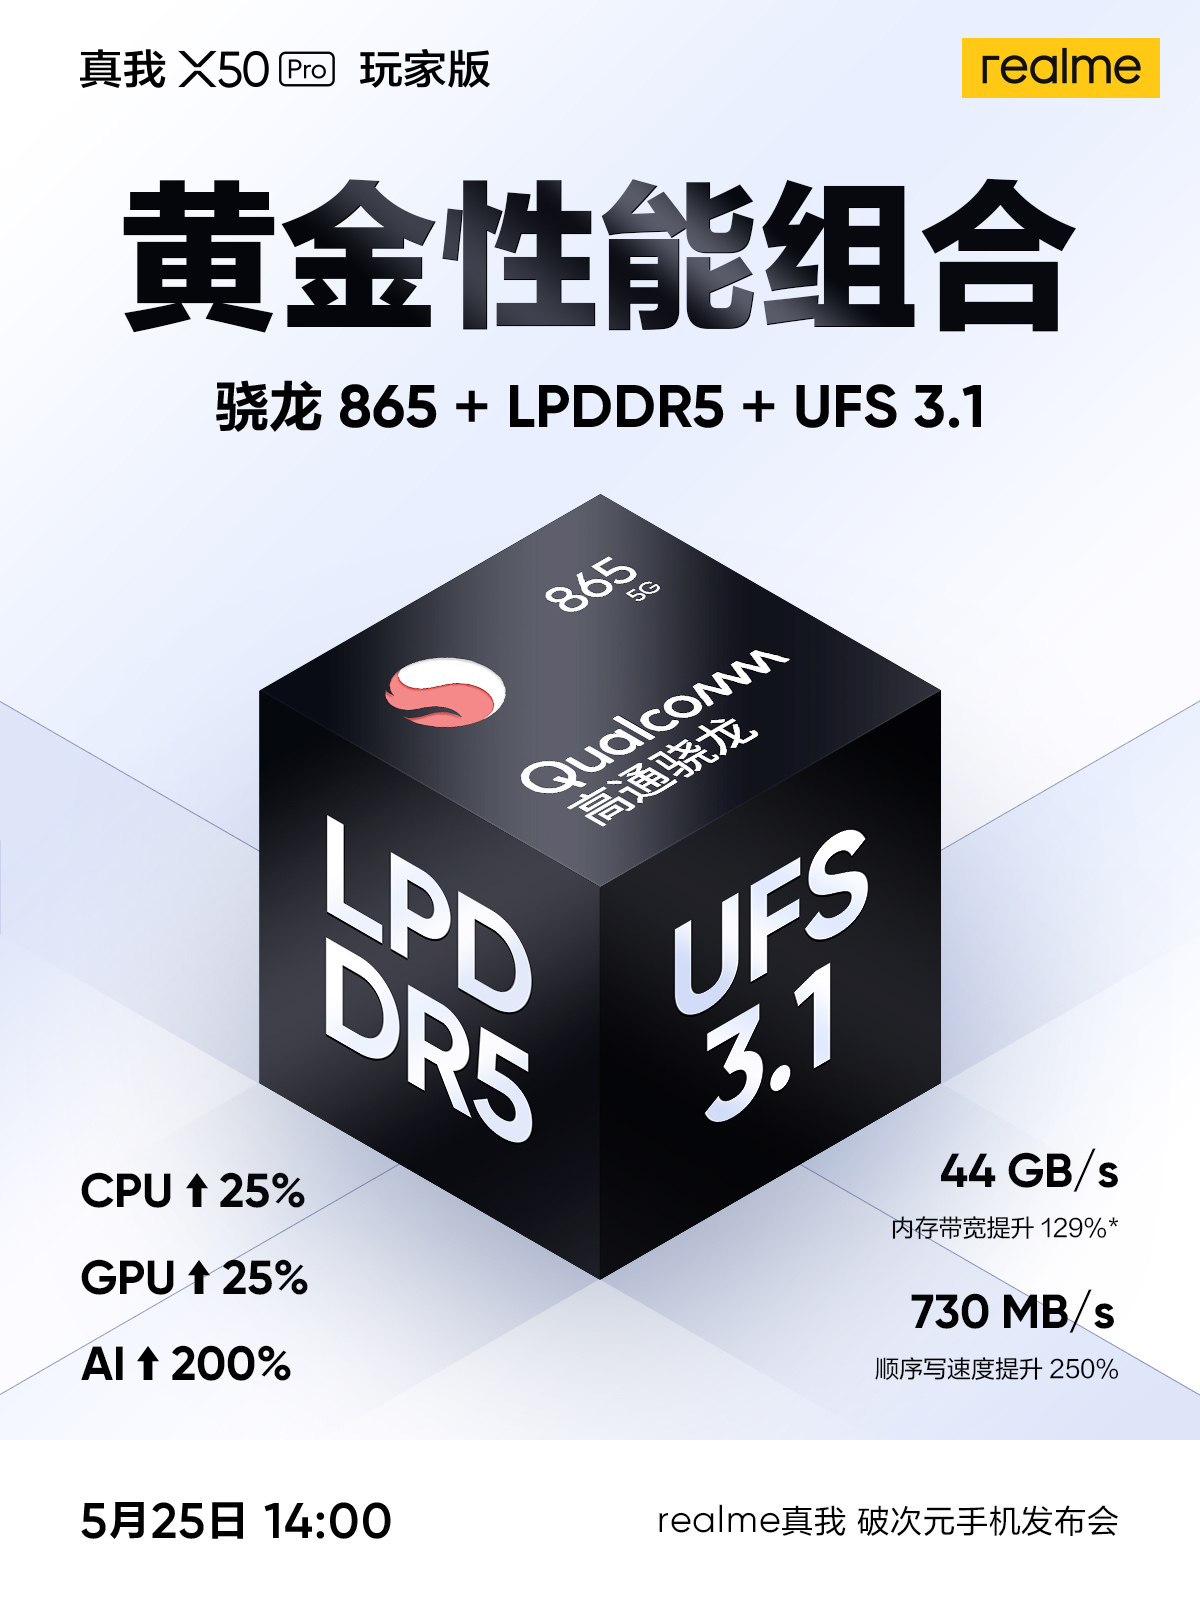 Realme X50 Pro Player EditionUFS 3.1 LPDDR5